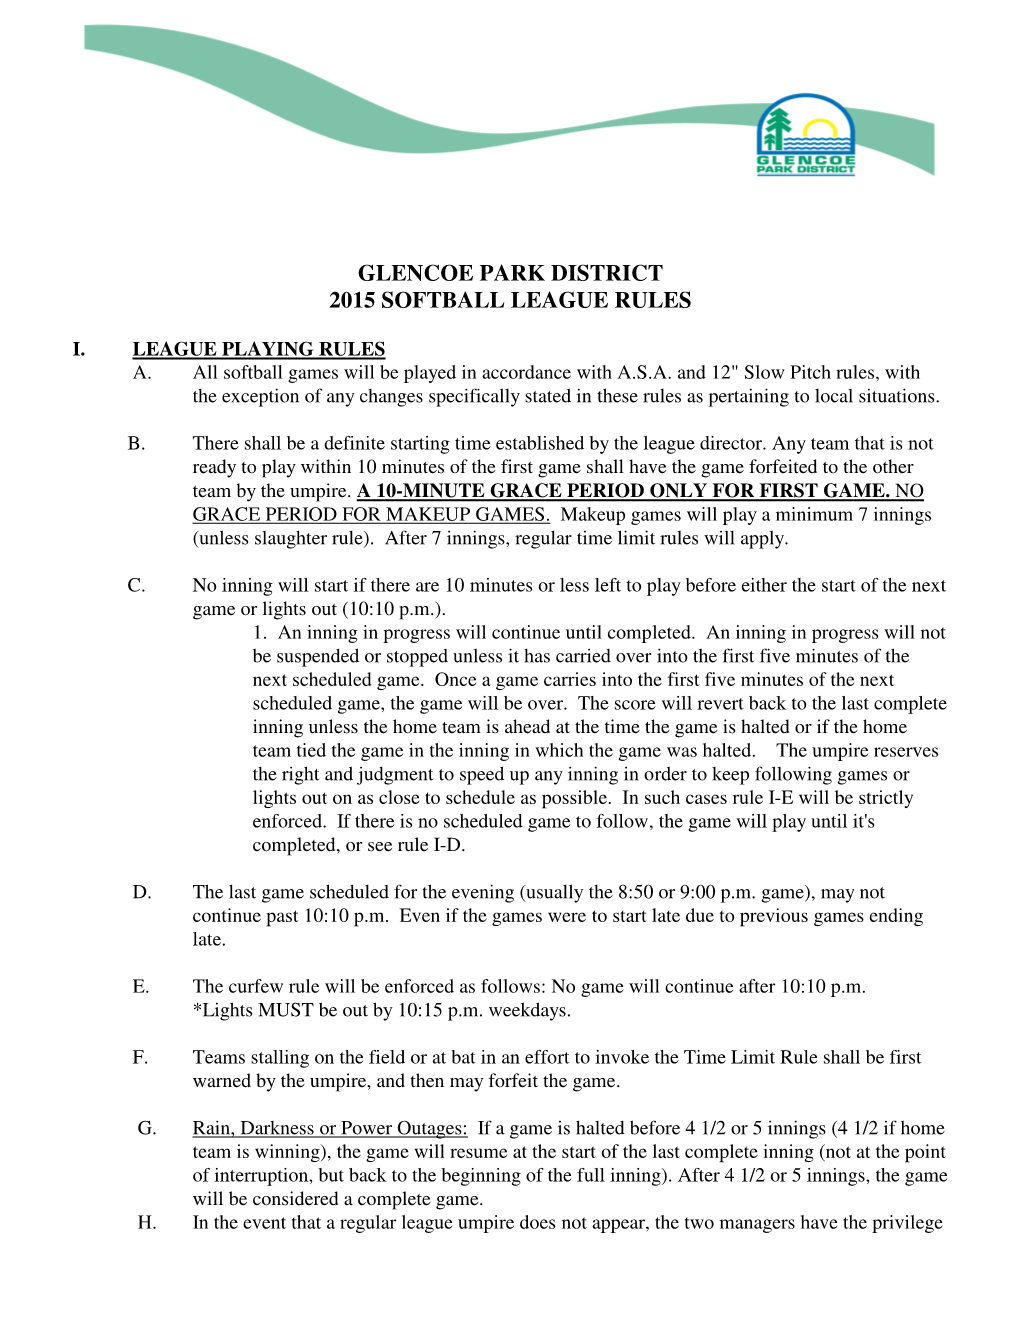 Glencoe Park District 2015 Softball League Rules